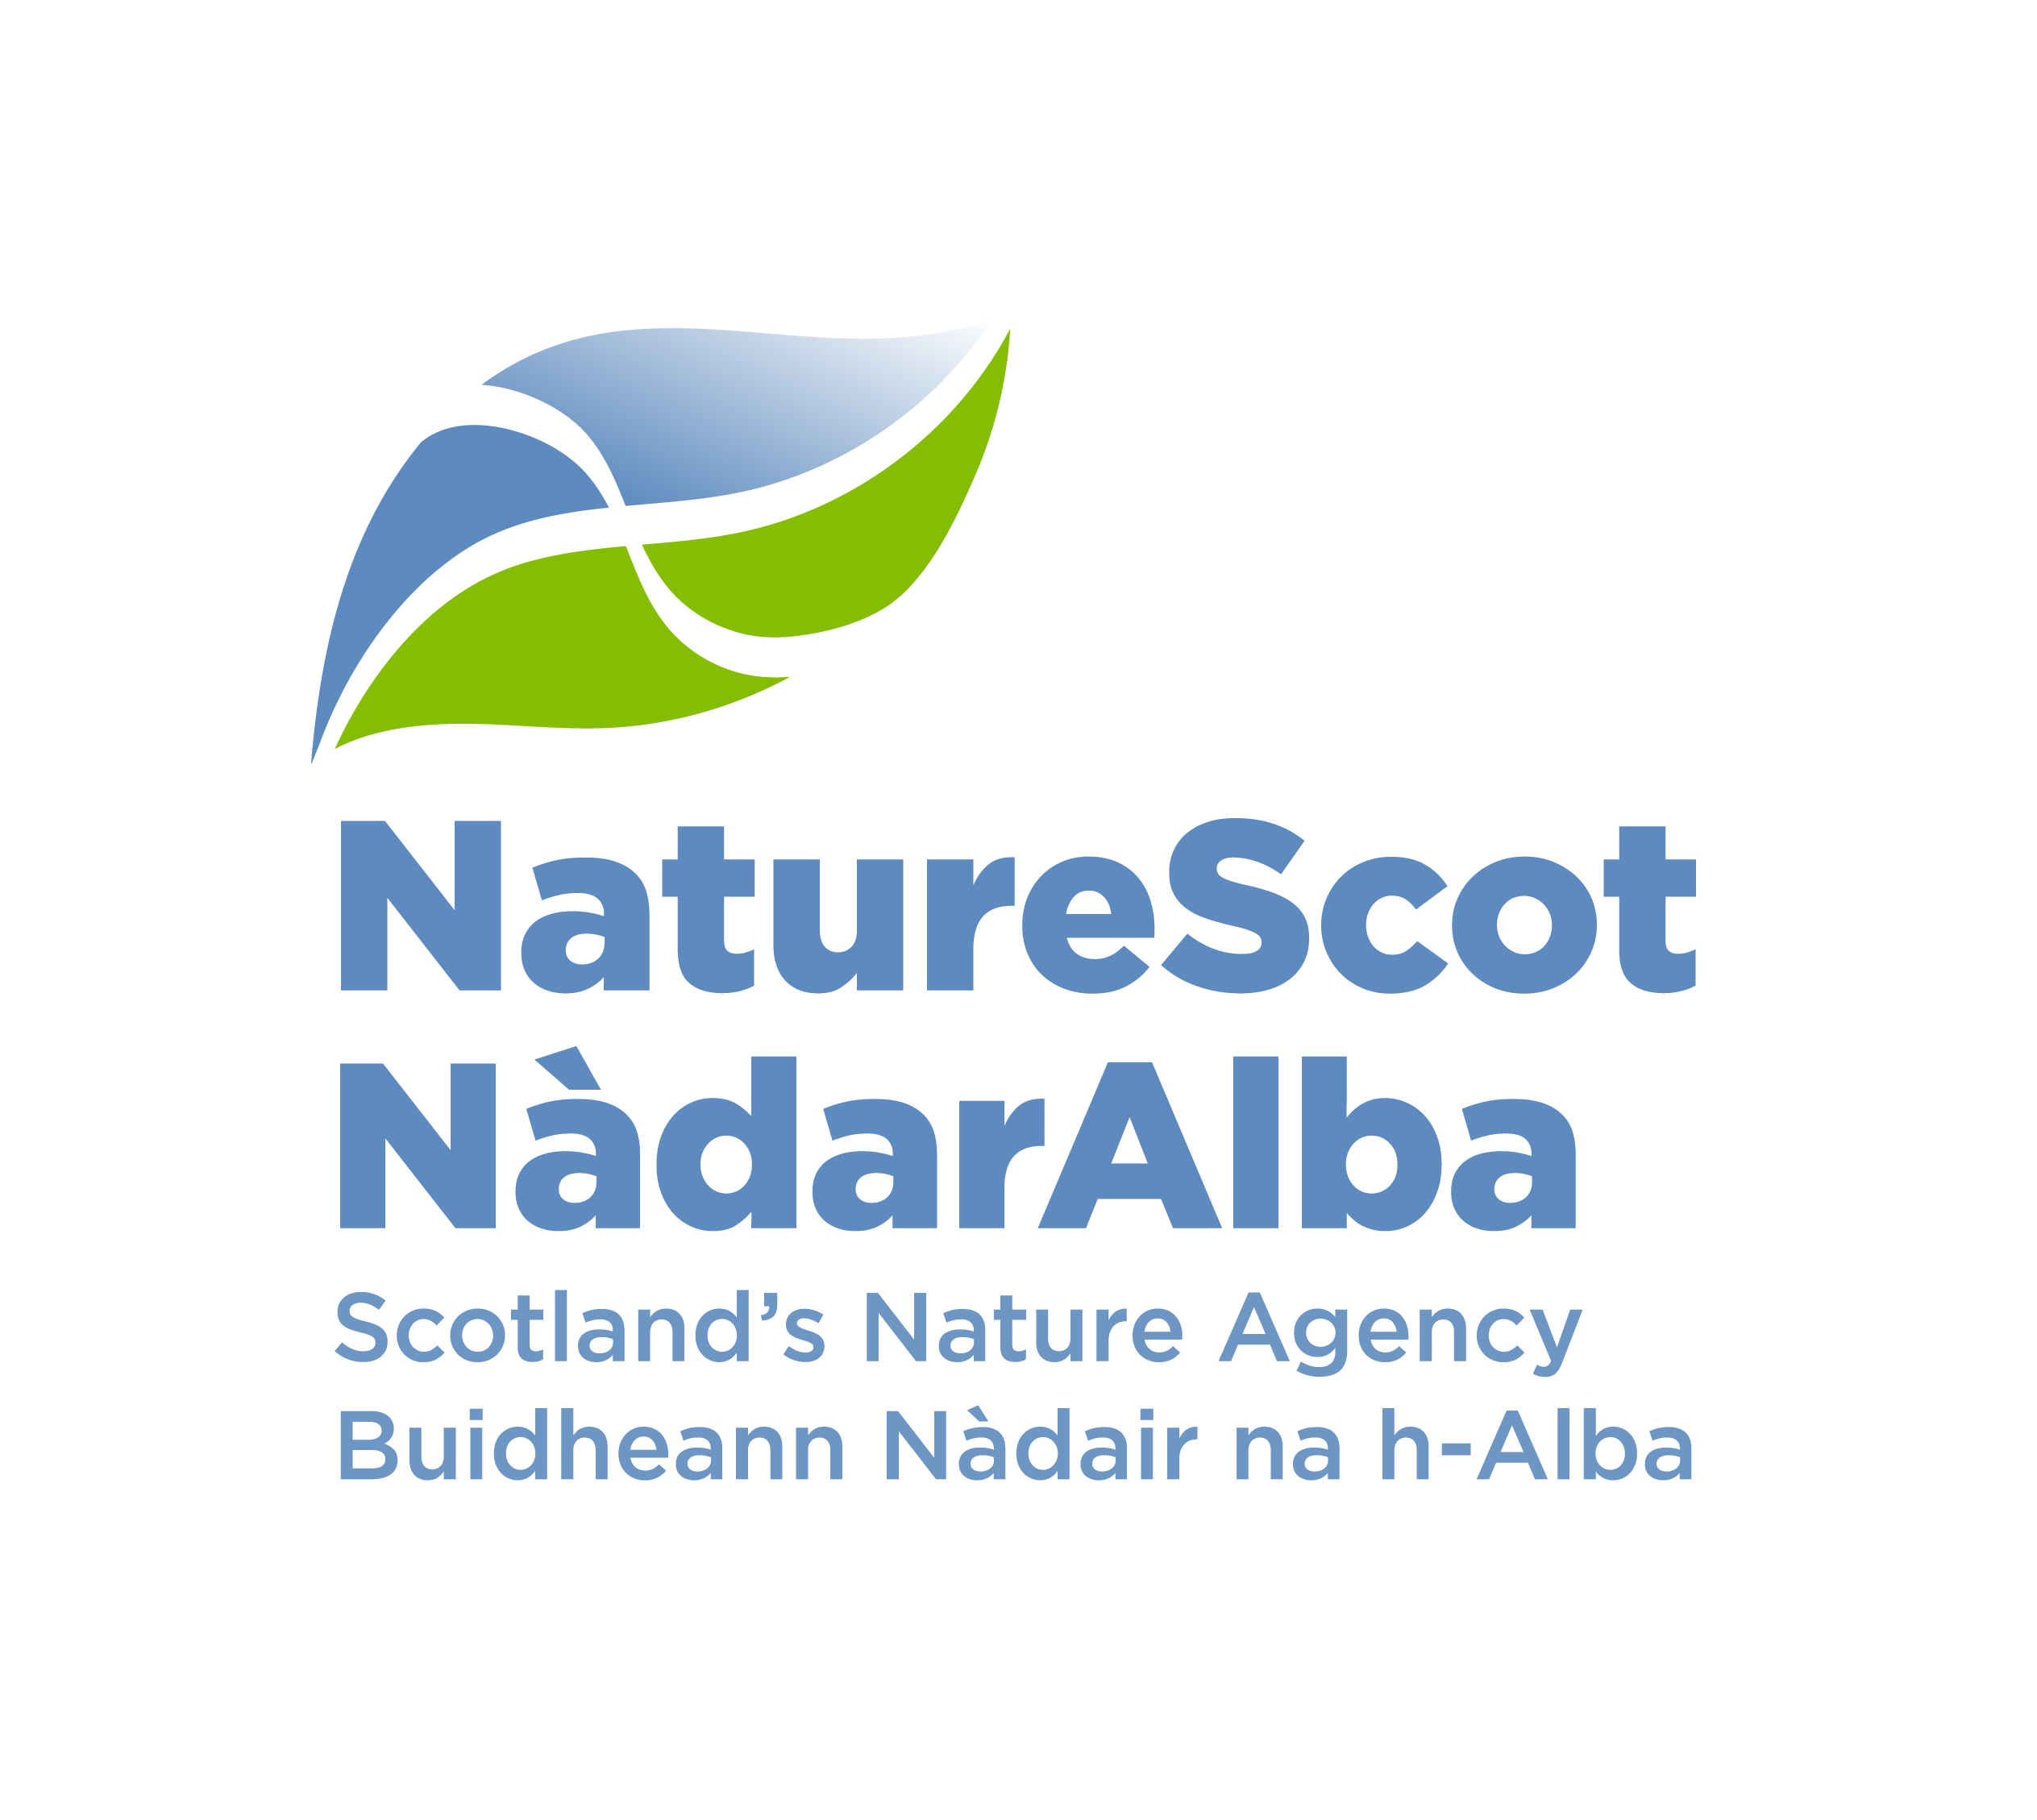 NatureScot colour logo